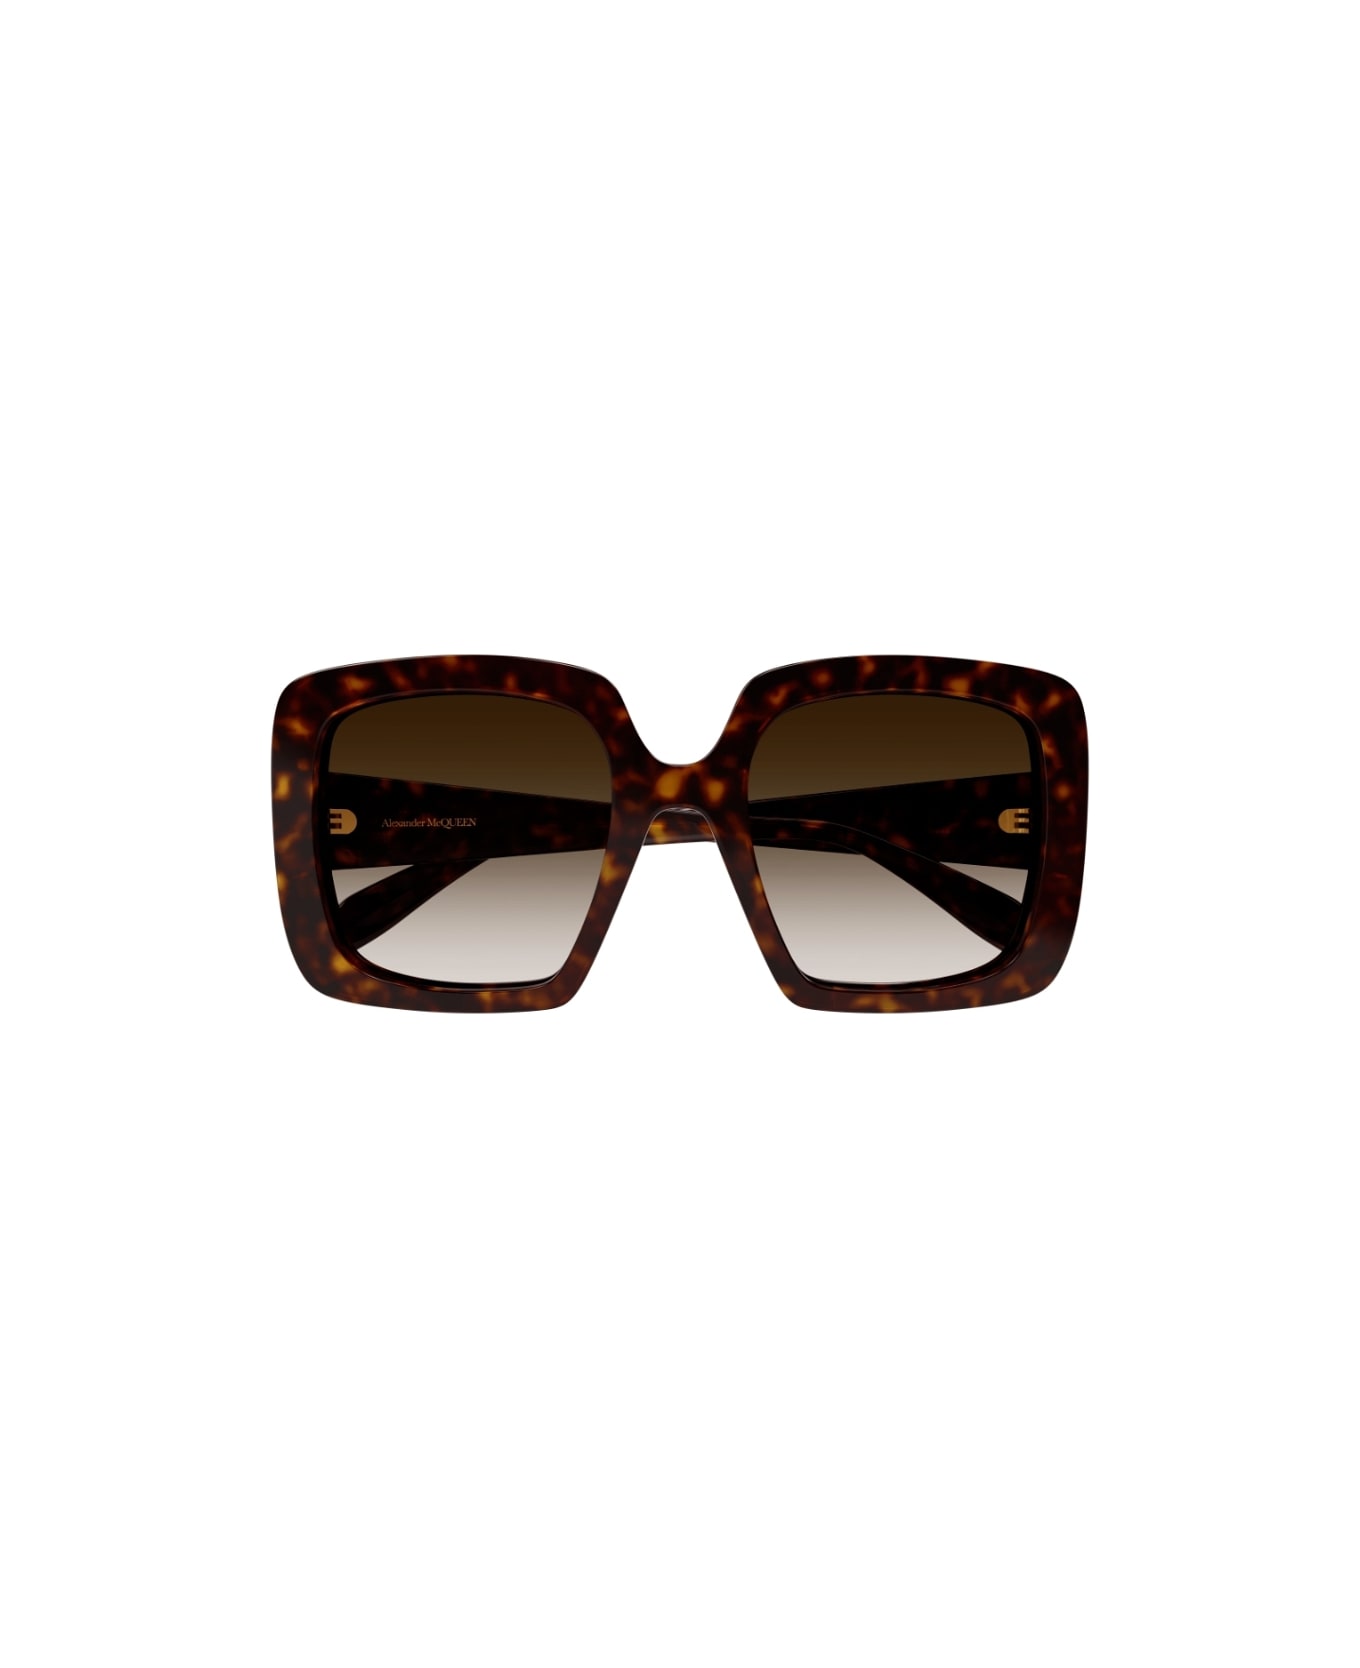 Alexander McQueen Eyewear AM078S 002 Sunglasses - Tartarugato